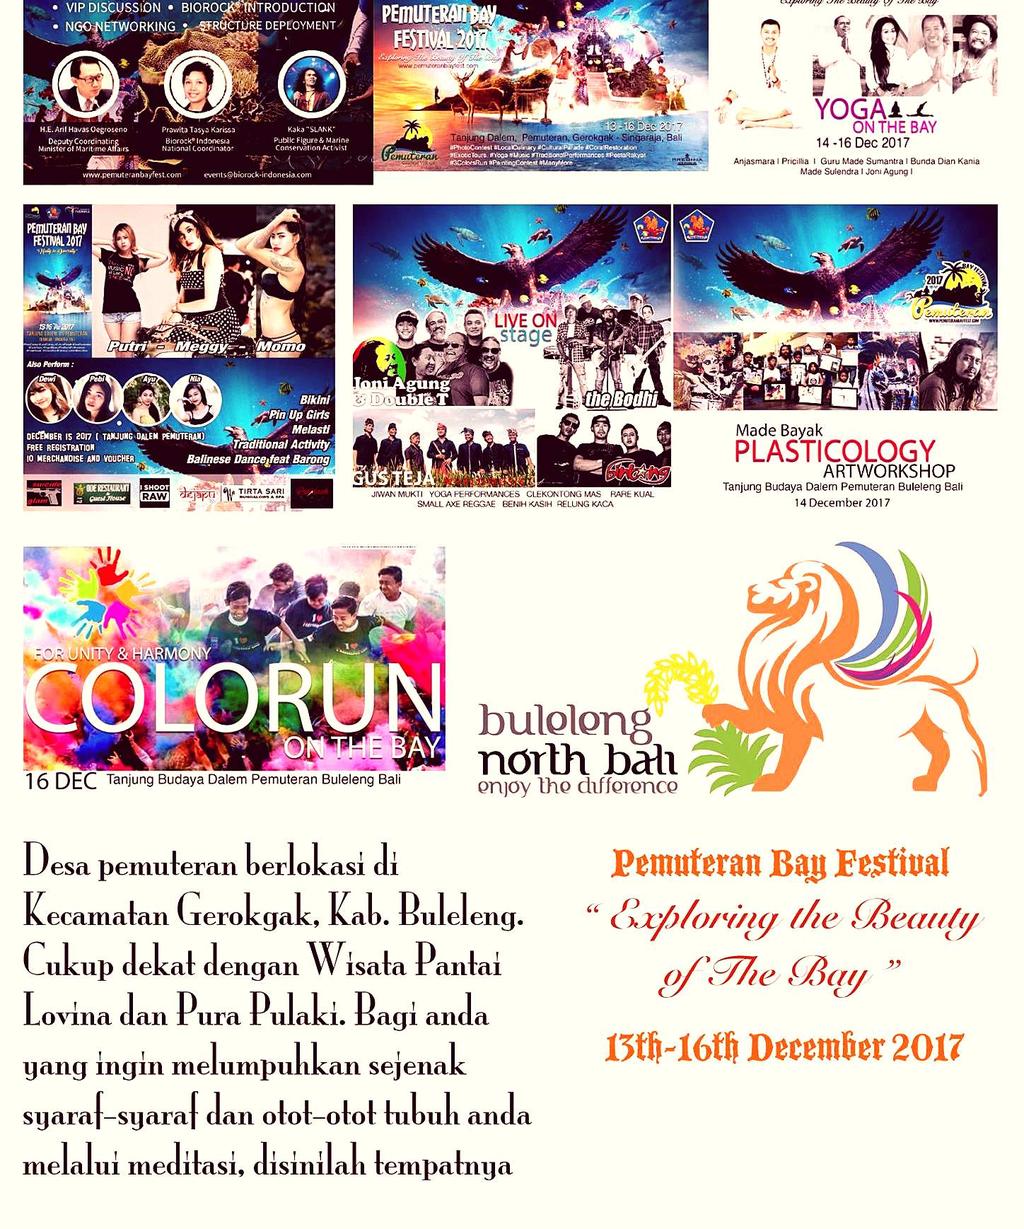 COMING SOON PEMUTERAN BAY FESTIVAL 2017 13TH - 16TH DECEMBER 2017